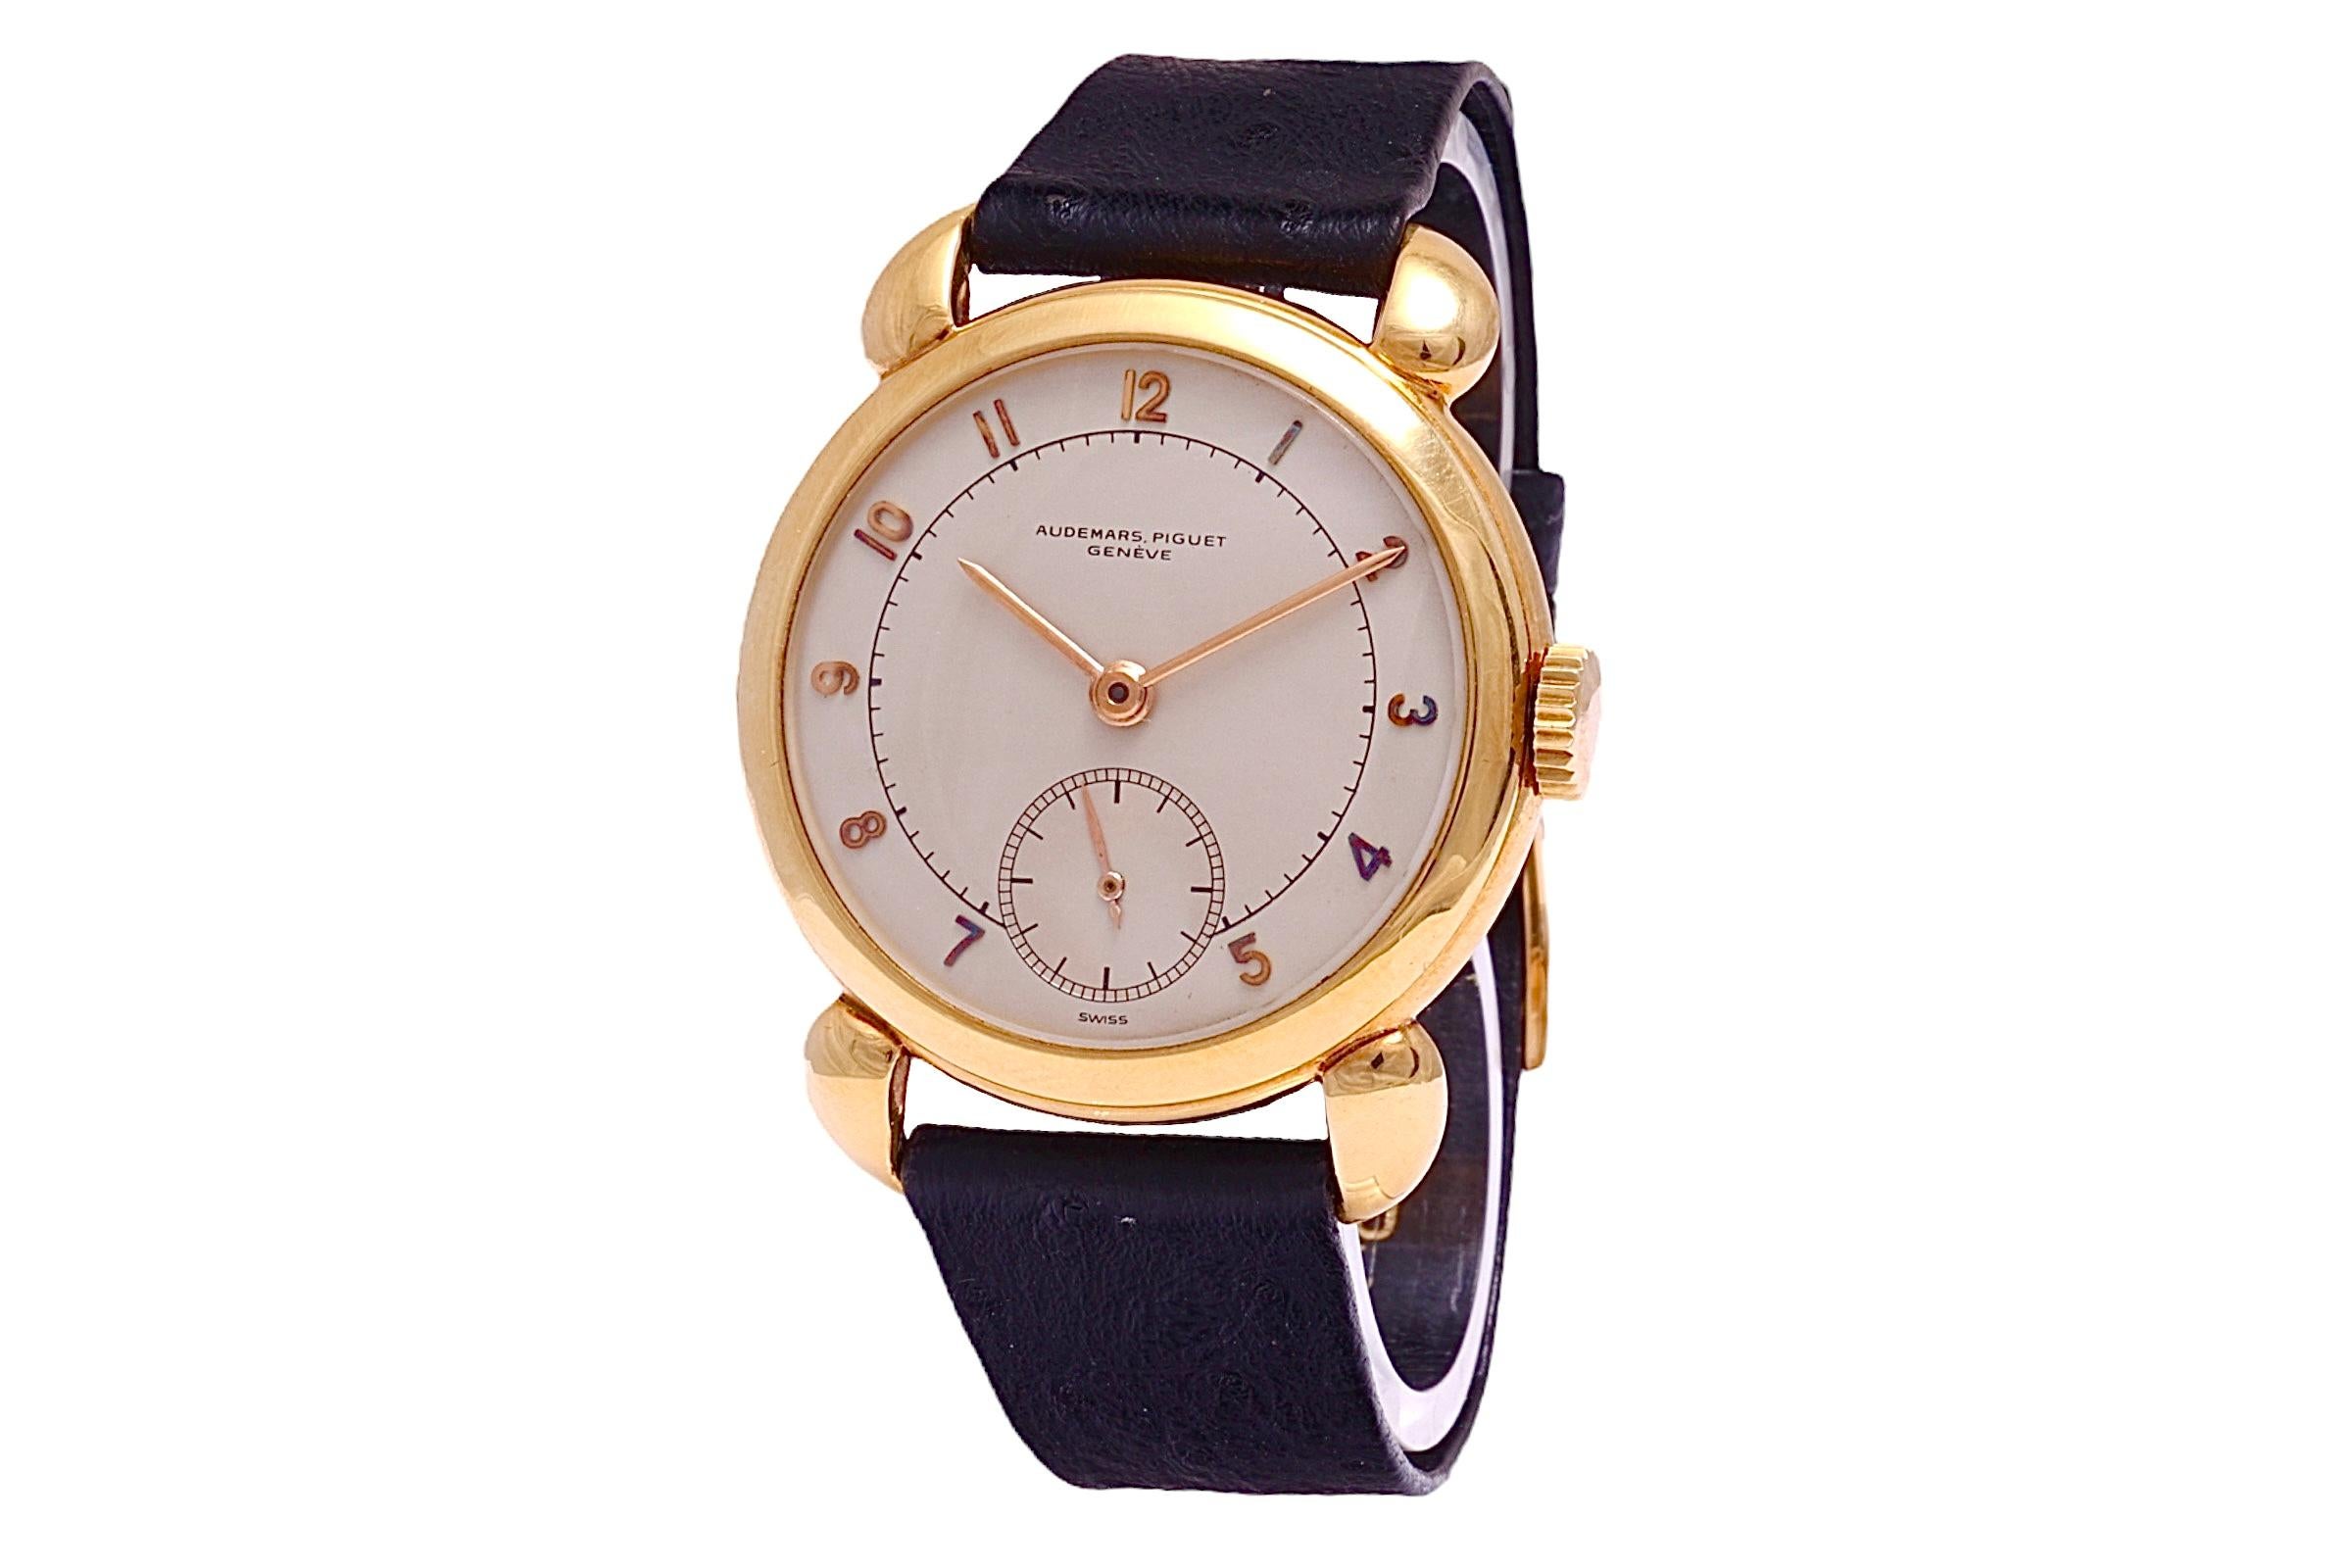 Artisan 18 Kt Gold Audemars Piguet Calatrava Vintage Rare Collectors Wrist Watch 1940's For Sale